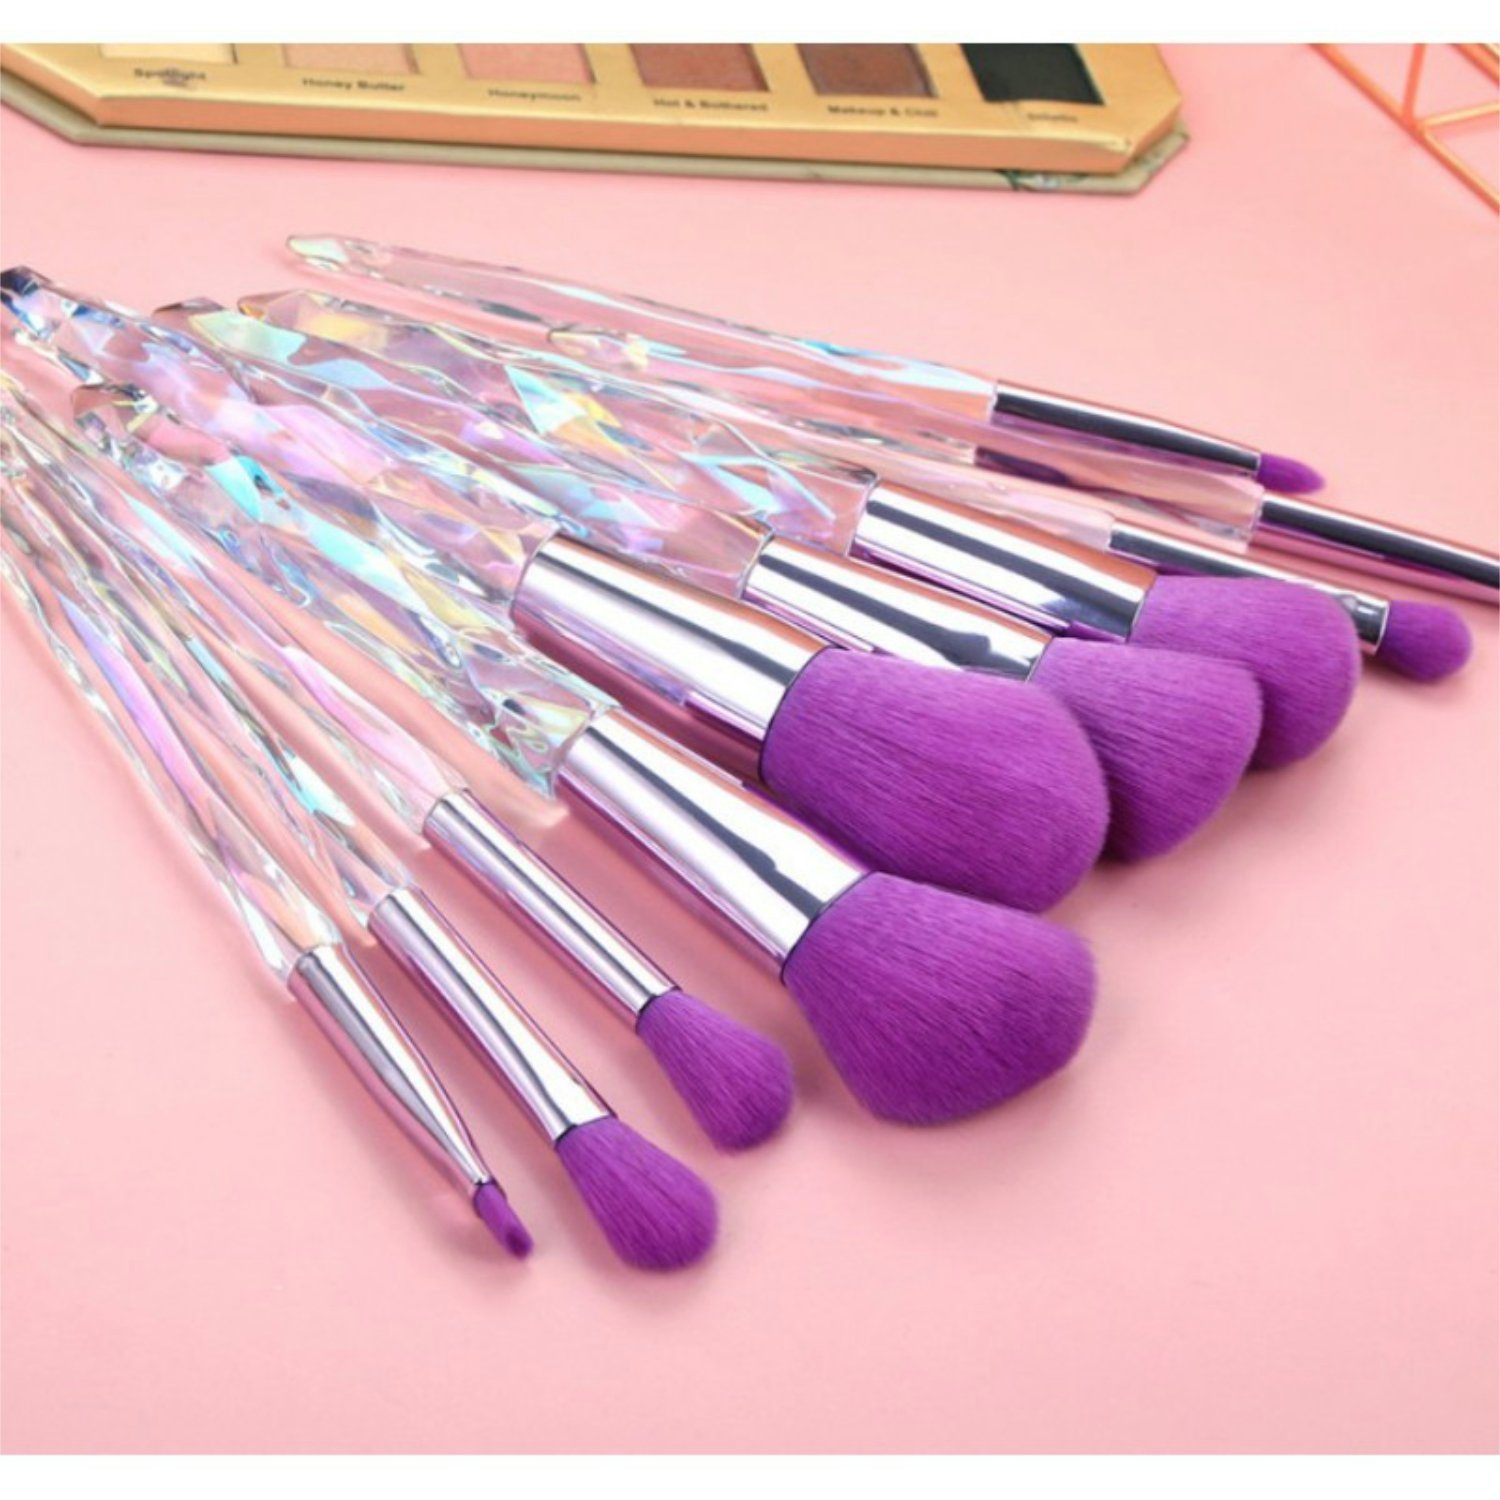 WS-Trend Kosmetikpinsel-Set 10-teiliges Make-Up-Pinsel Brushes, 10